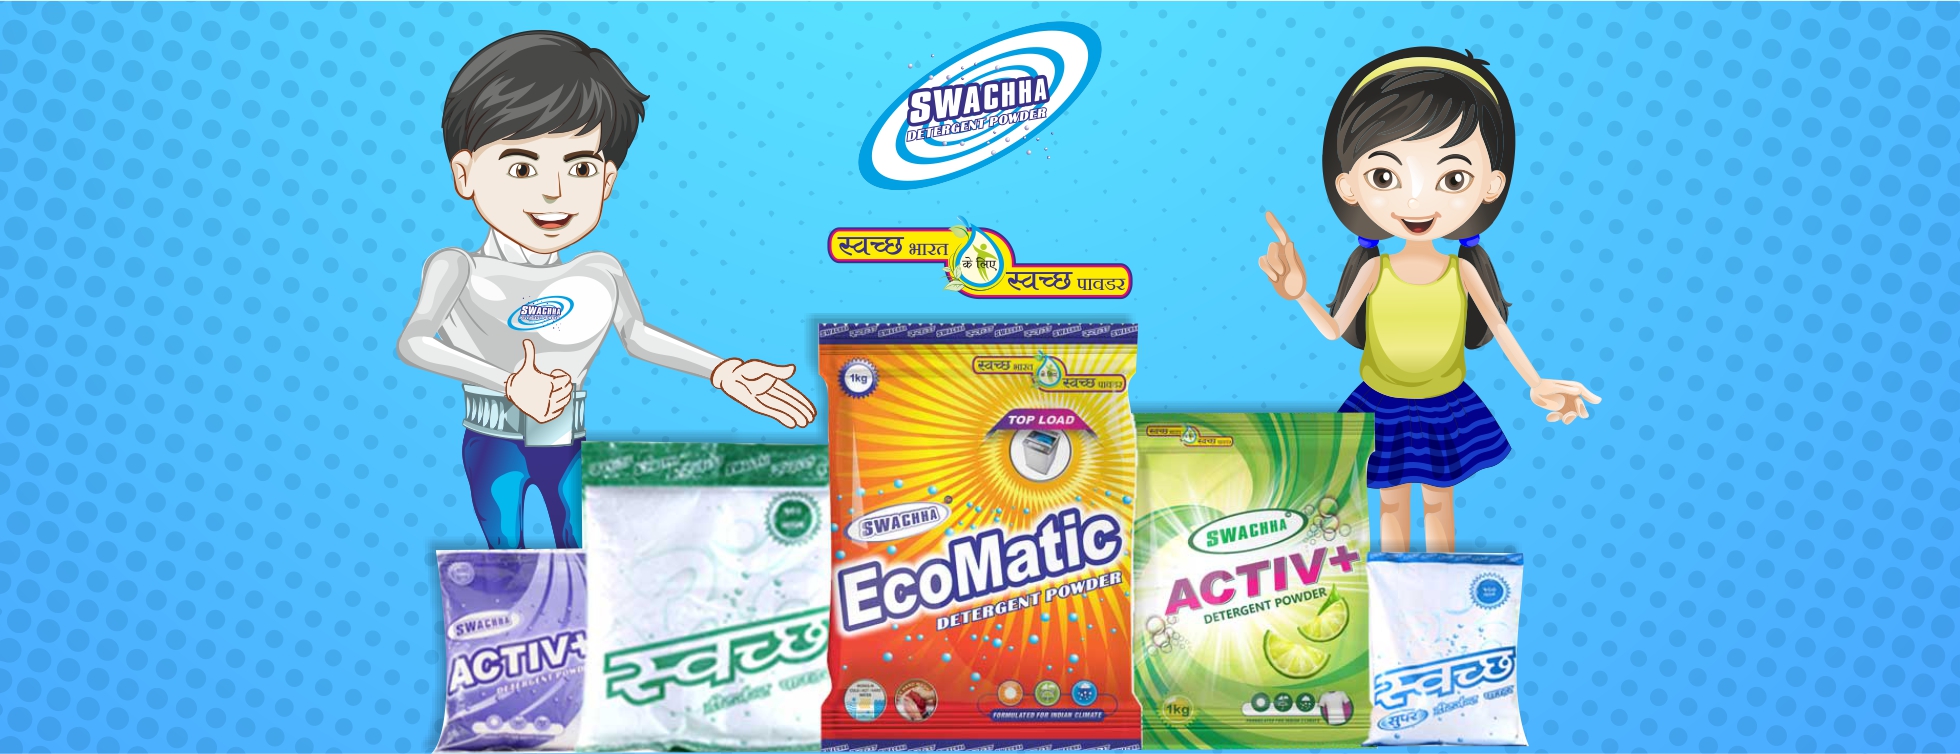 Swachha Product Line Up | Swachha Detergent Powder